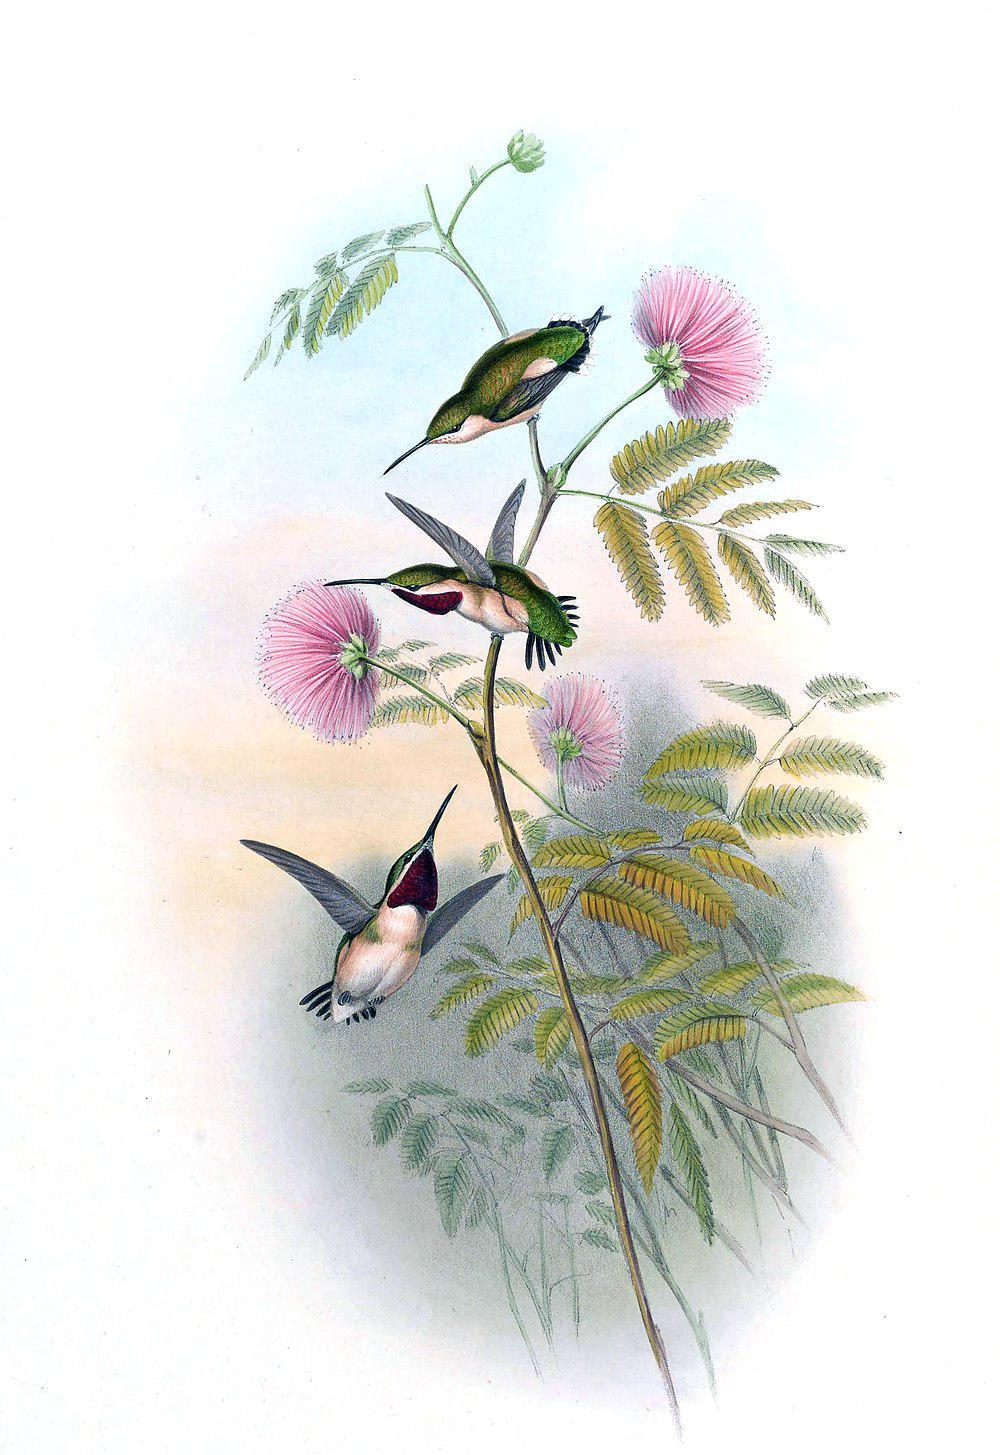 短尾蜂鸟 / Short-tailed Woodstar / Myrmia micrura